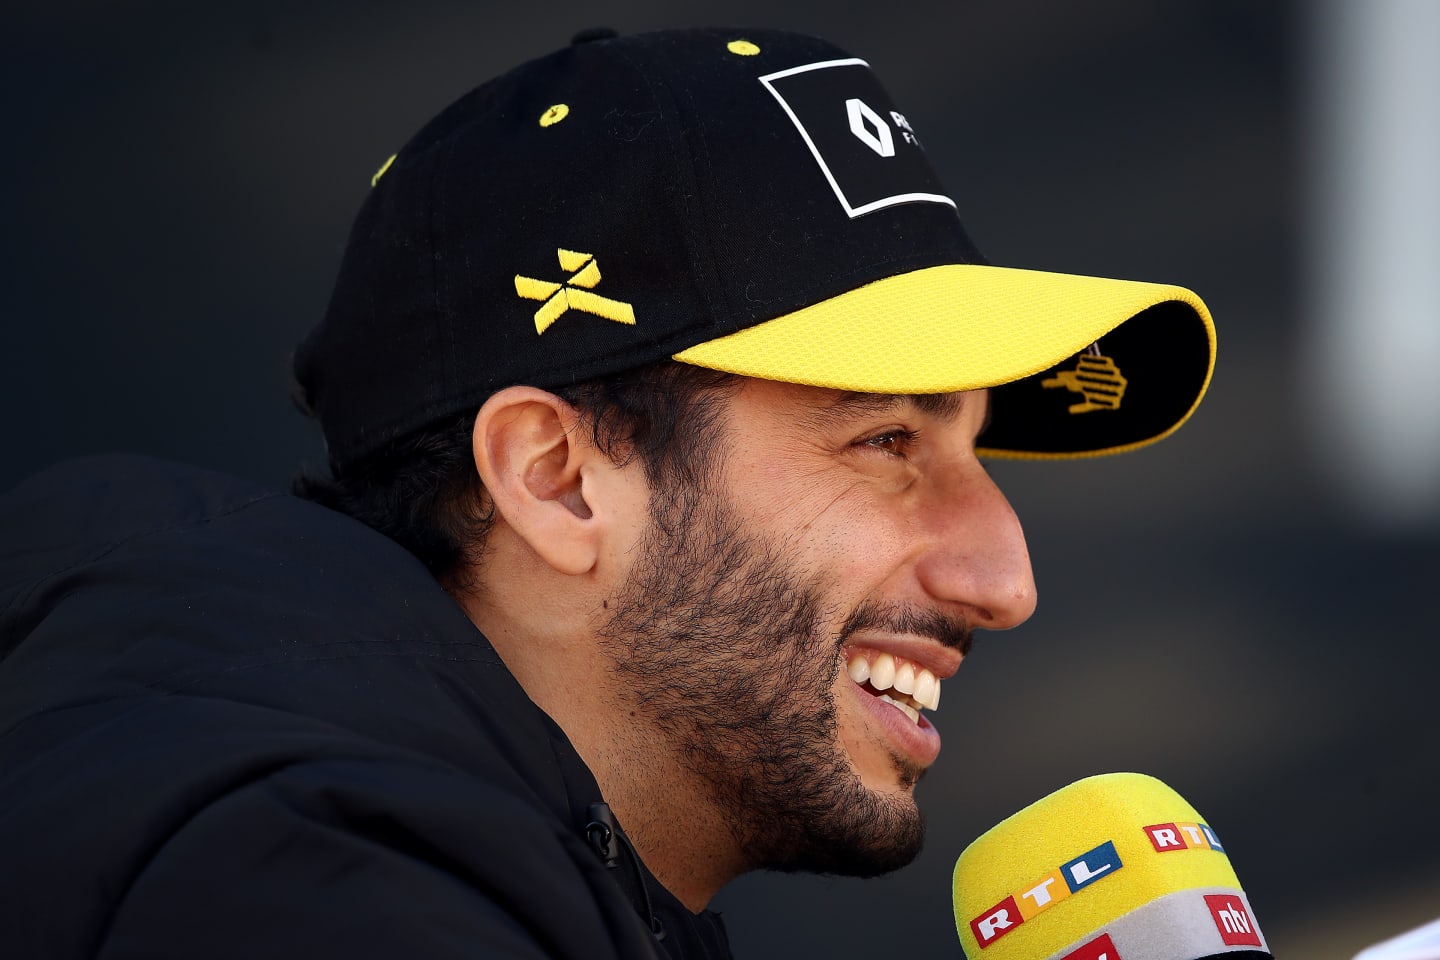 BARCELONA, SPAIN - FEBRUARY 26: Daniel Ricciardo of Australia and Renault Sport F1 talks to the